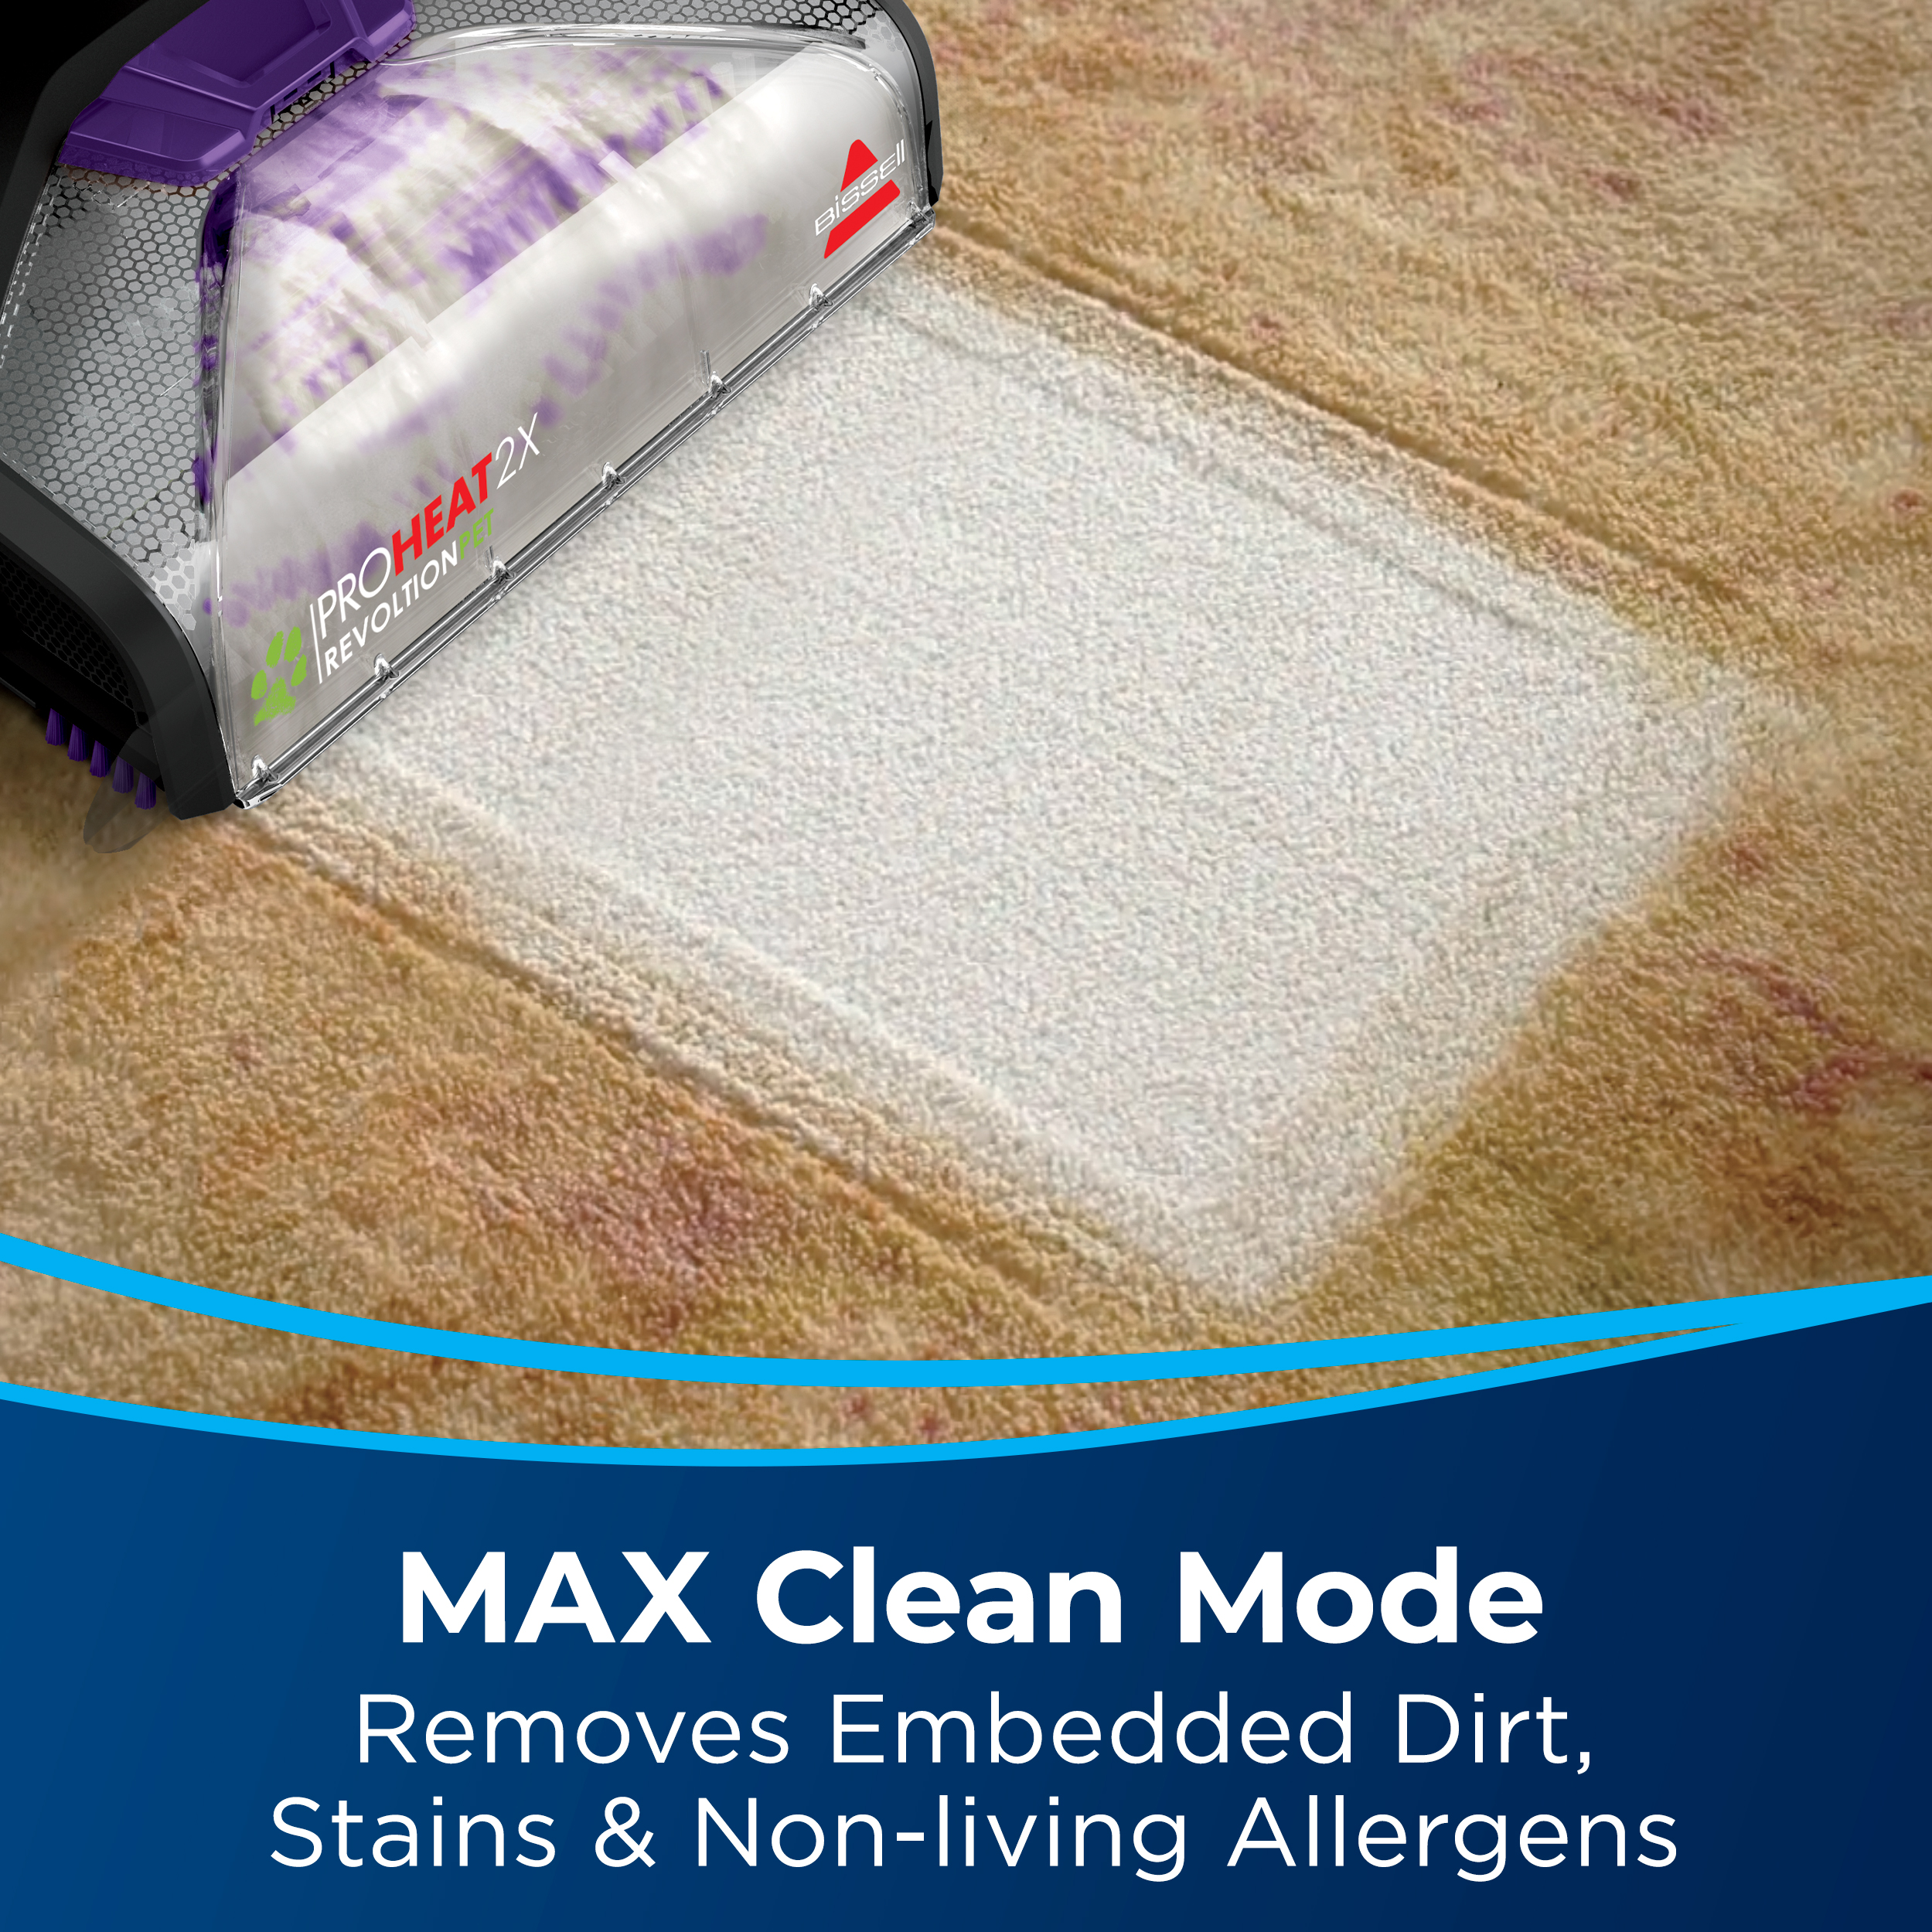 BISSELL Pro Heat 2X Revolution Pet Carpet Cleaner - 1551W - image 4 of 8